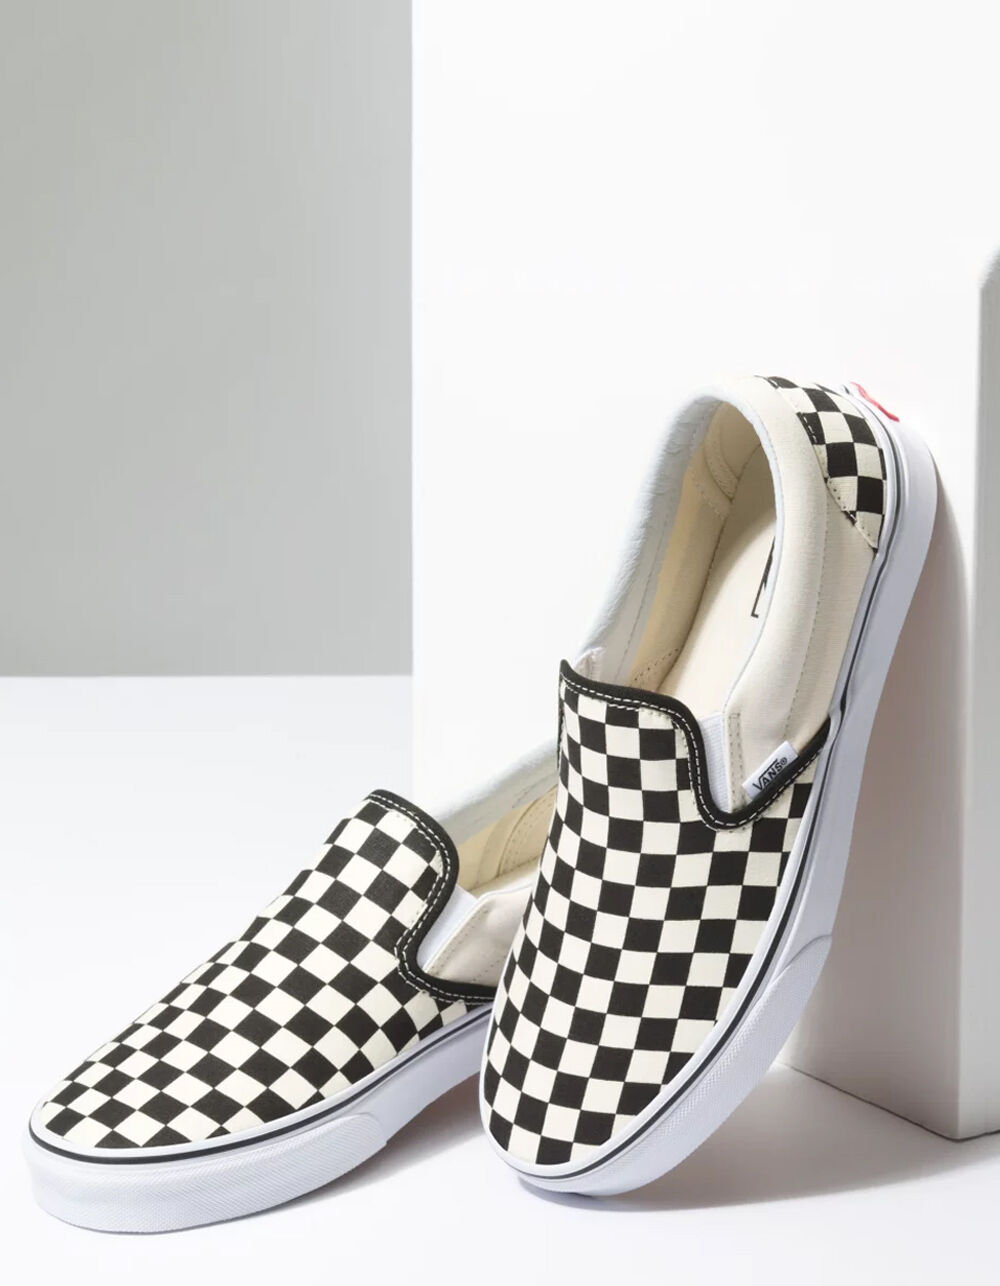 Men's shoes Vans Classic Slip-On Black & White Checkerboard/ White